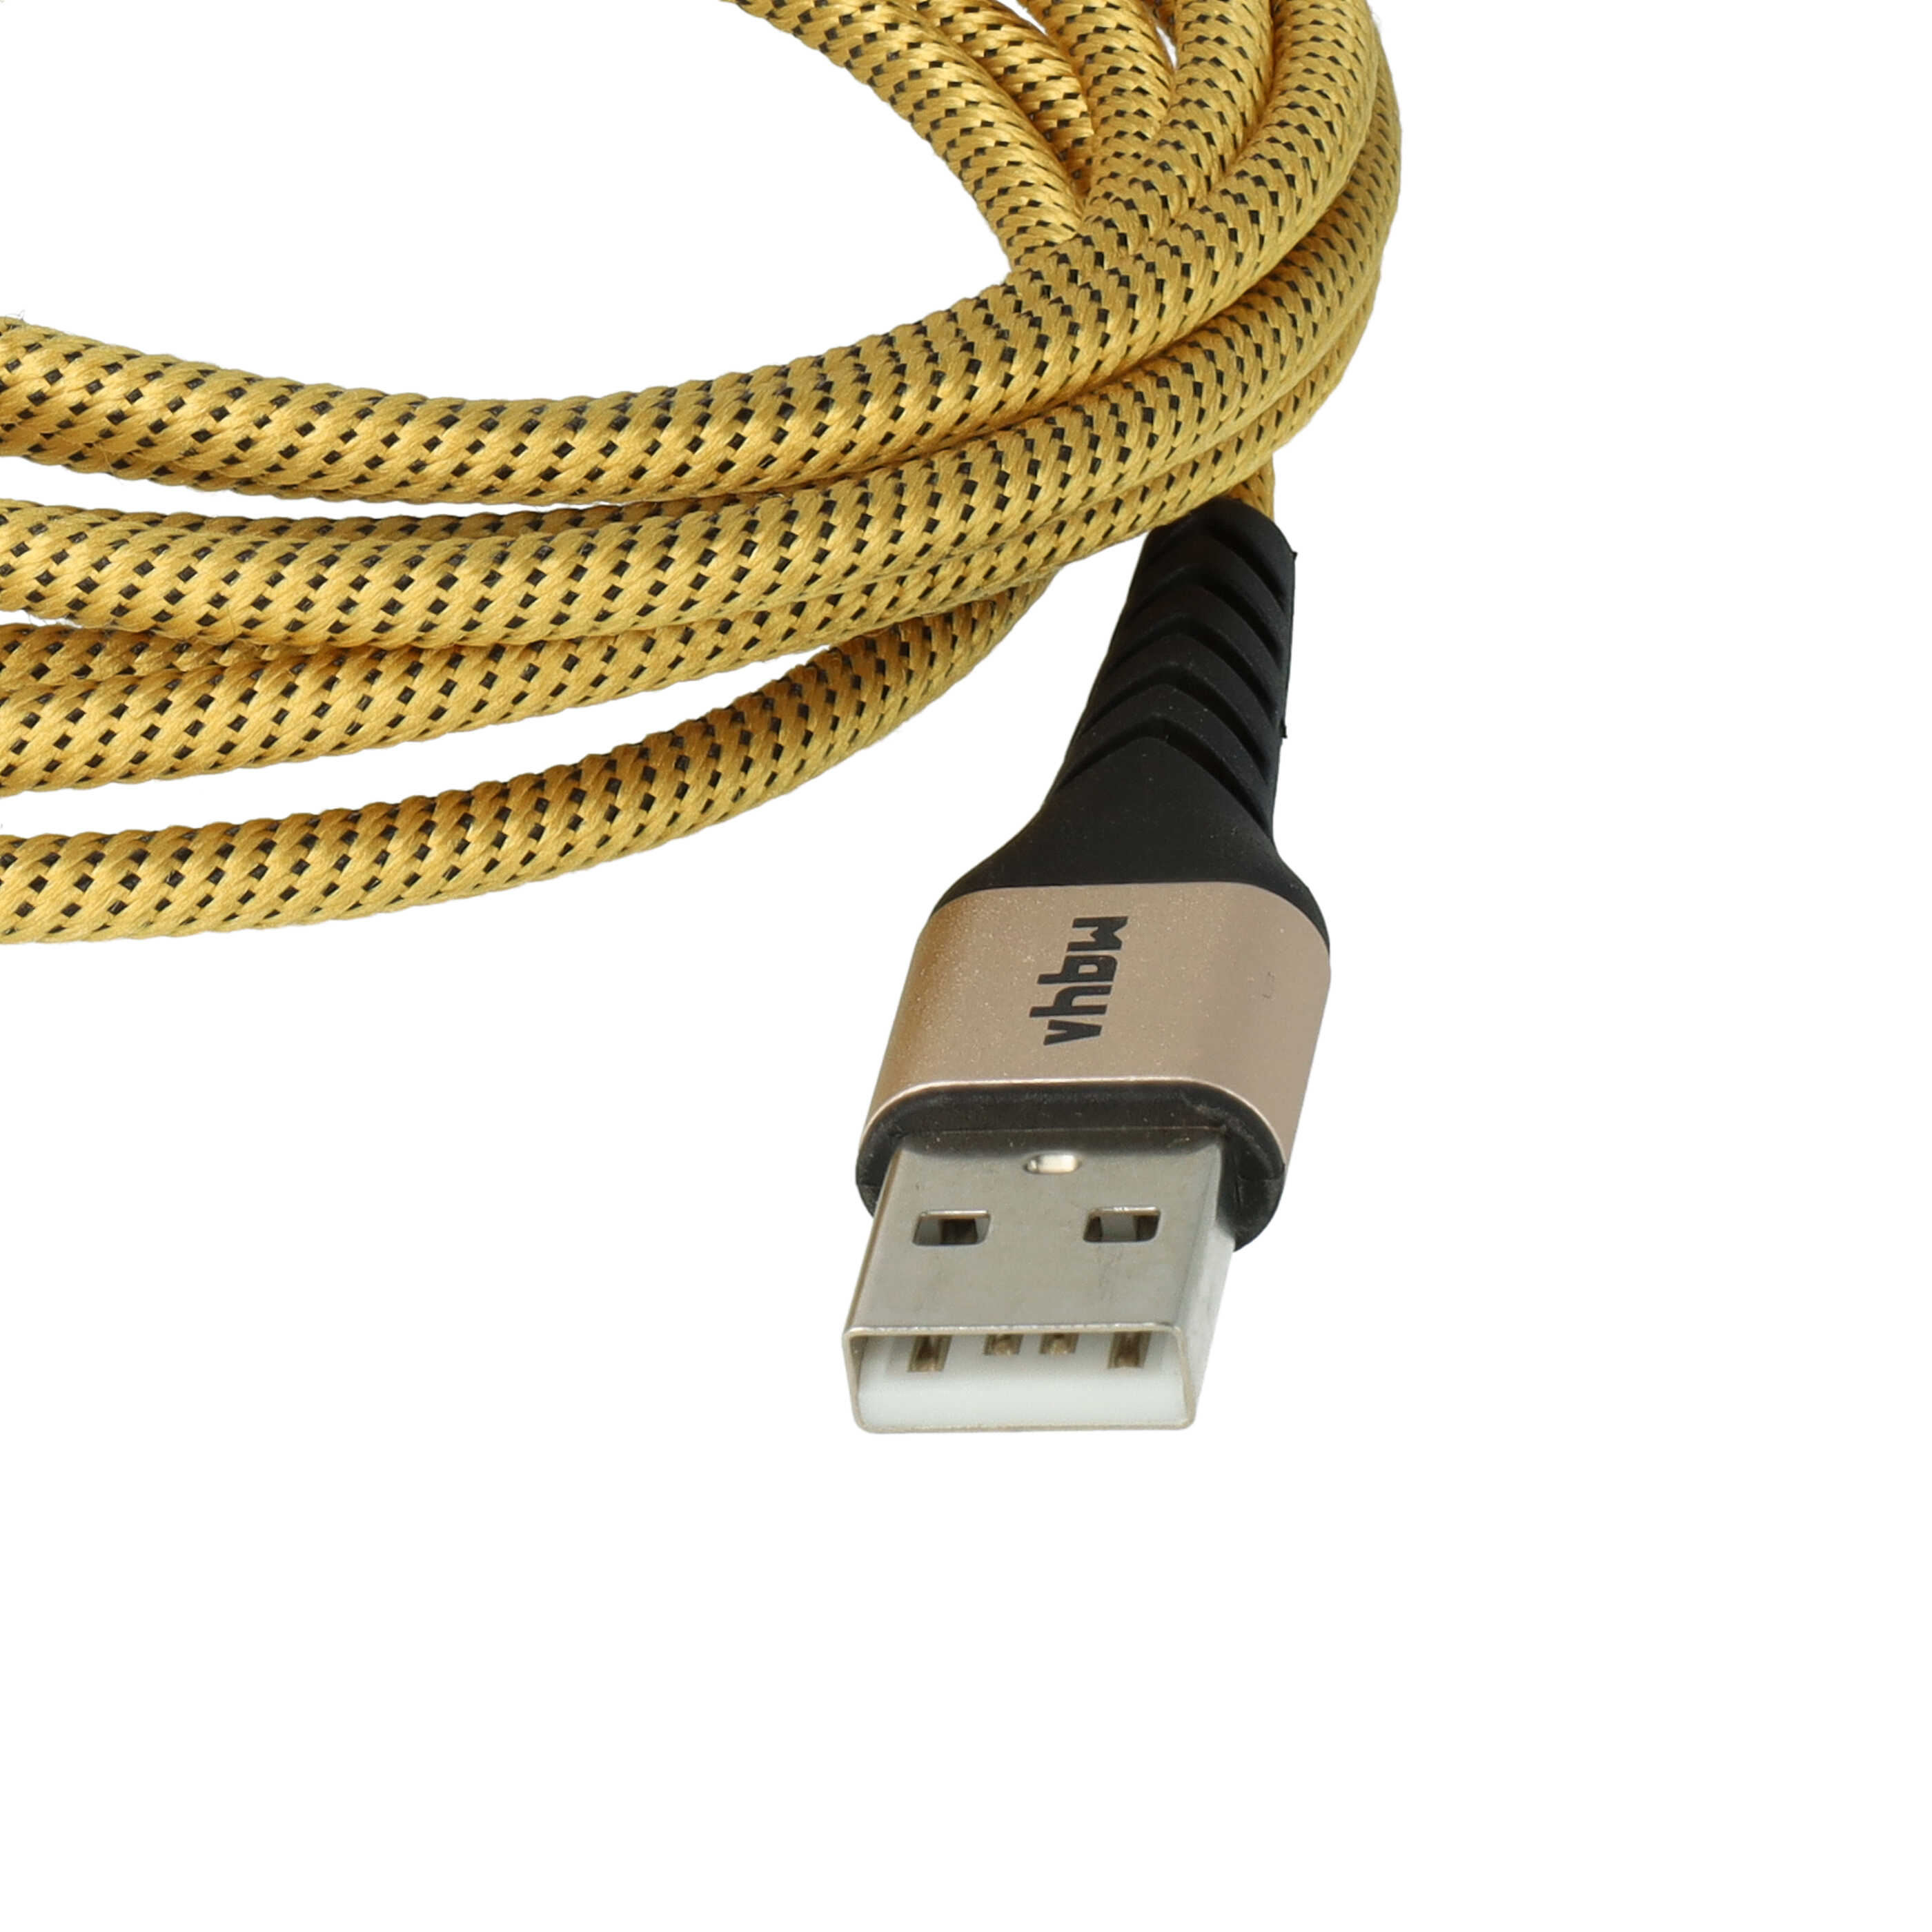 Cavo lightning - USB A per dispositivi Apple iOS Apple AirPods - nero / giallo, 180cm